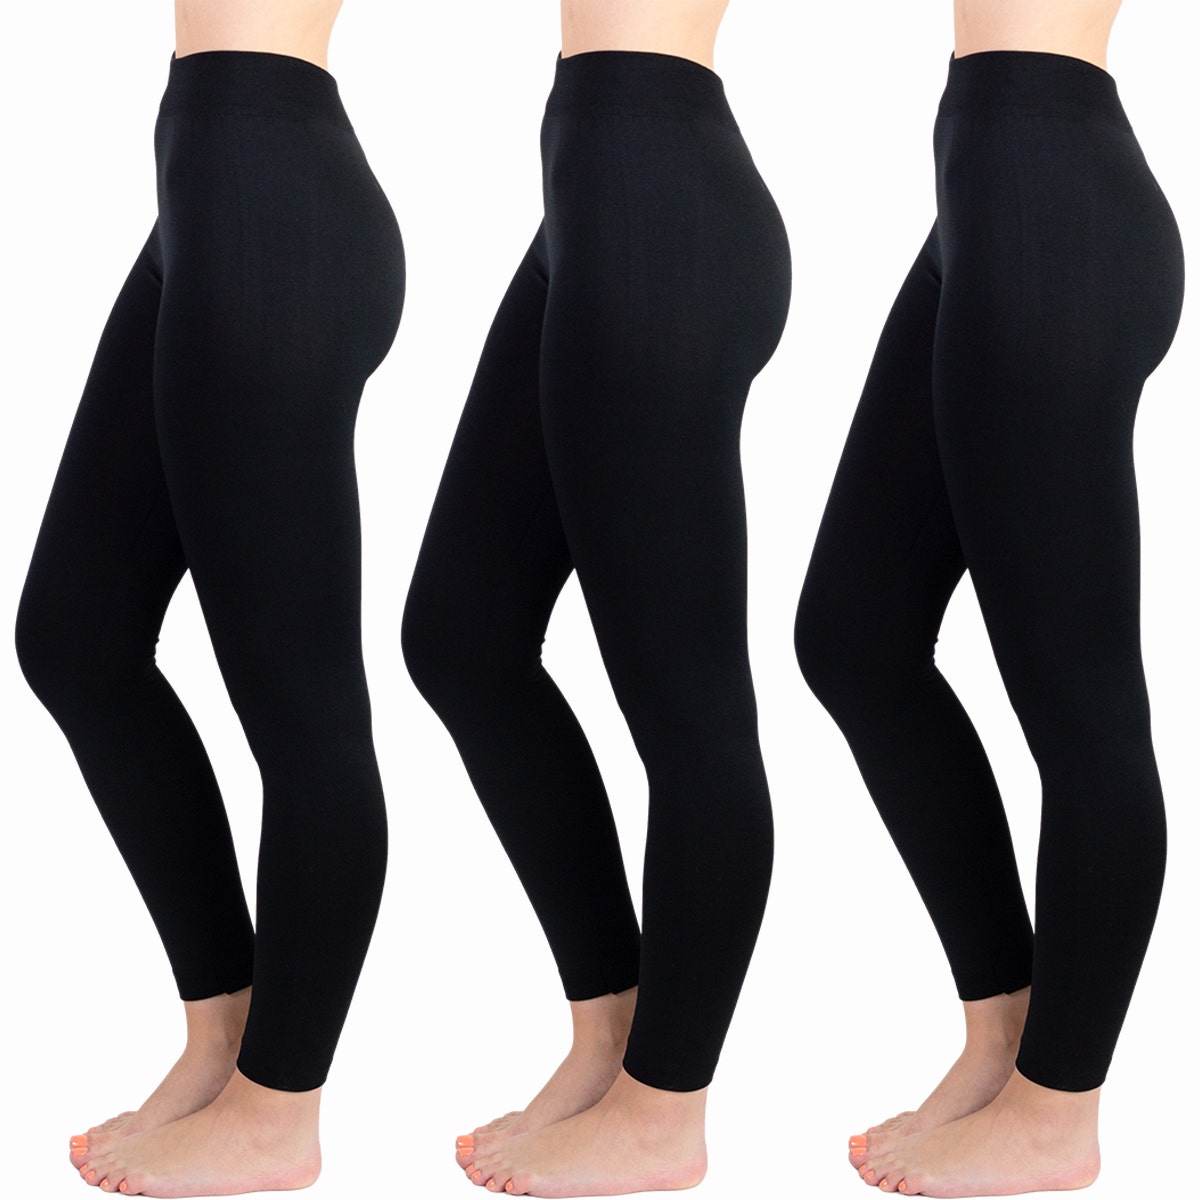 Apana 7/8 Length Yoga Pants – High Waist Activewear Bottoms